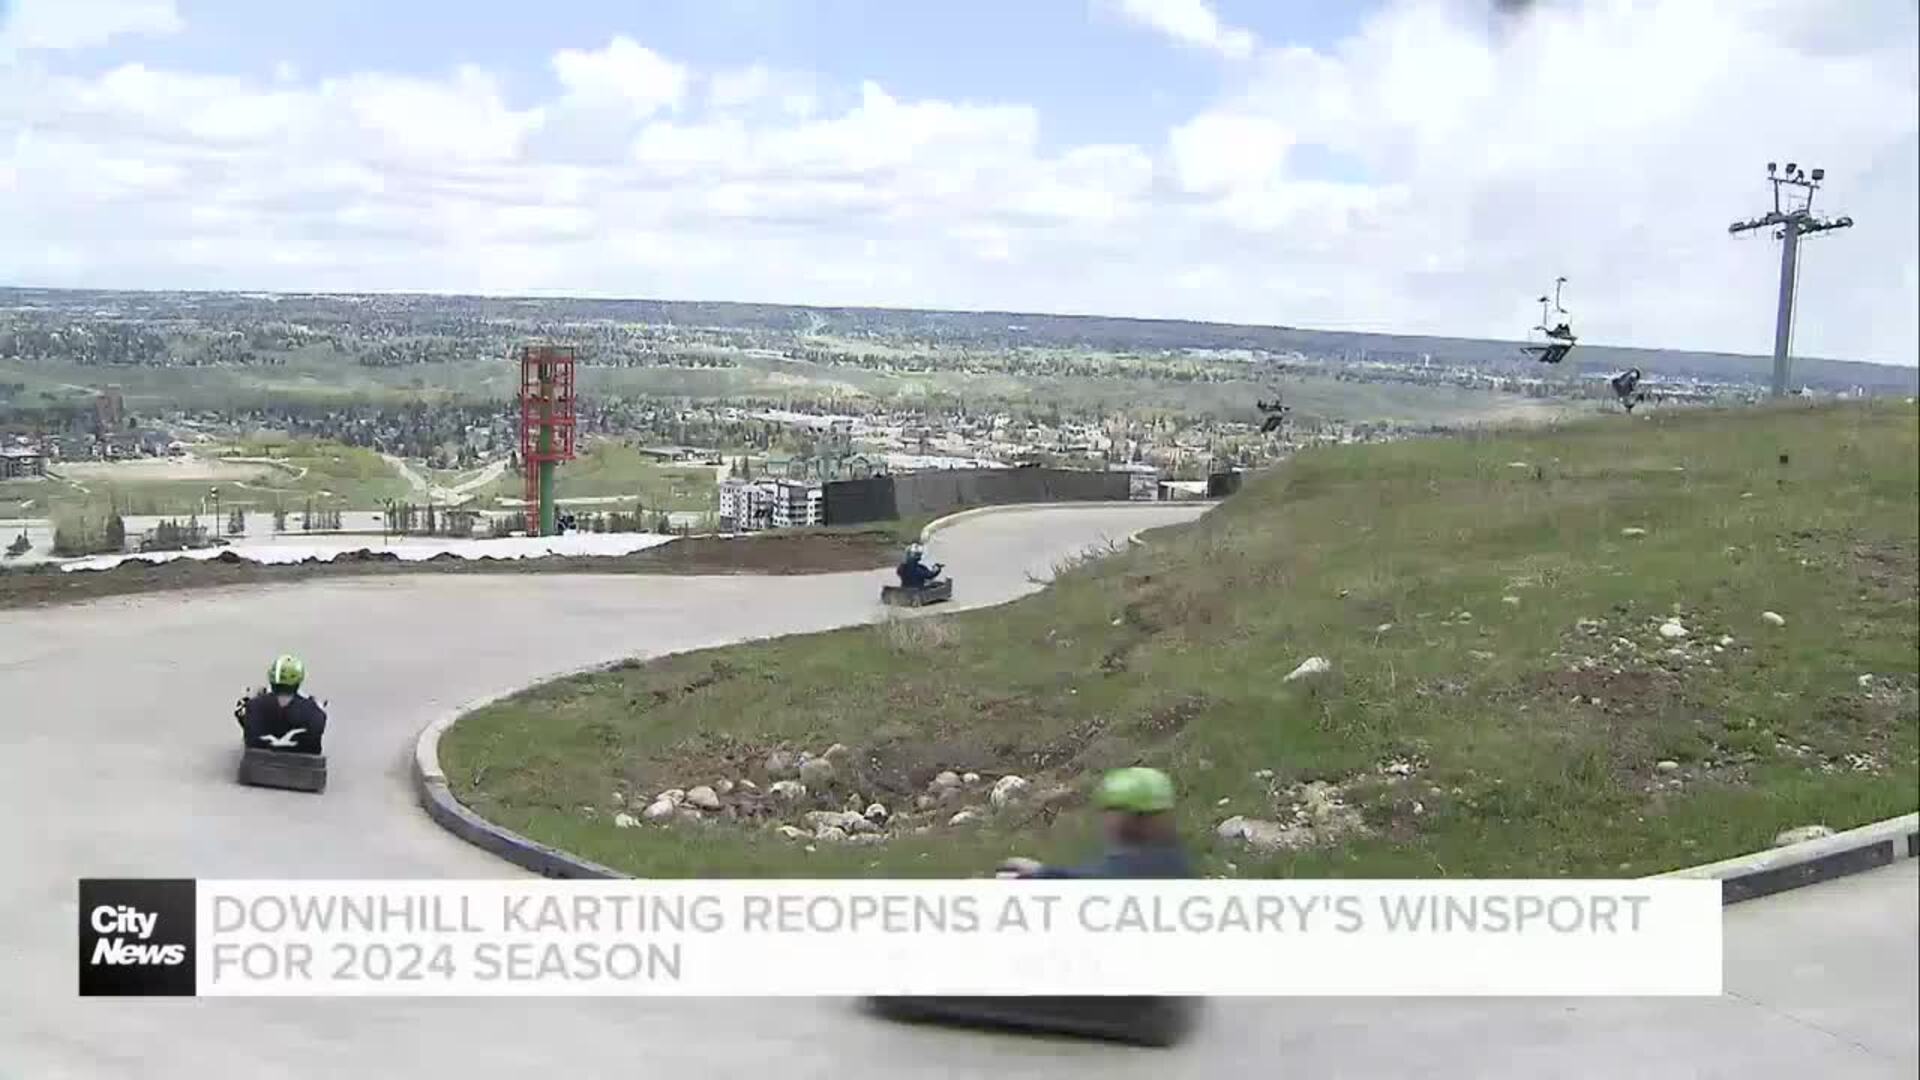 Downhill karting reopens at Calgary's Winsport for 2024 season